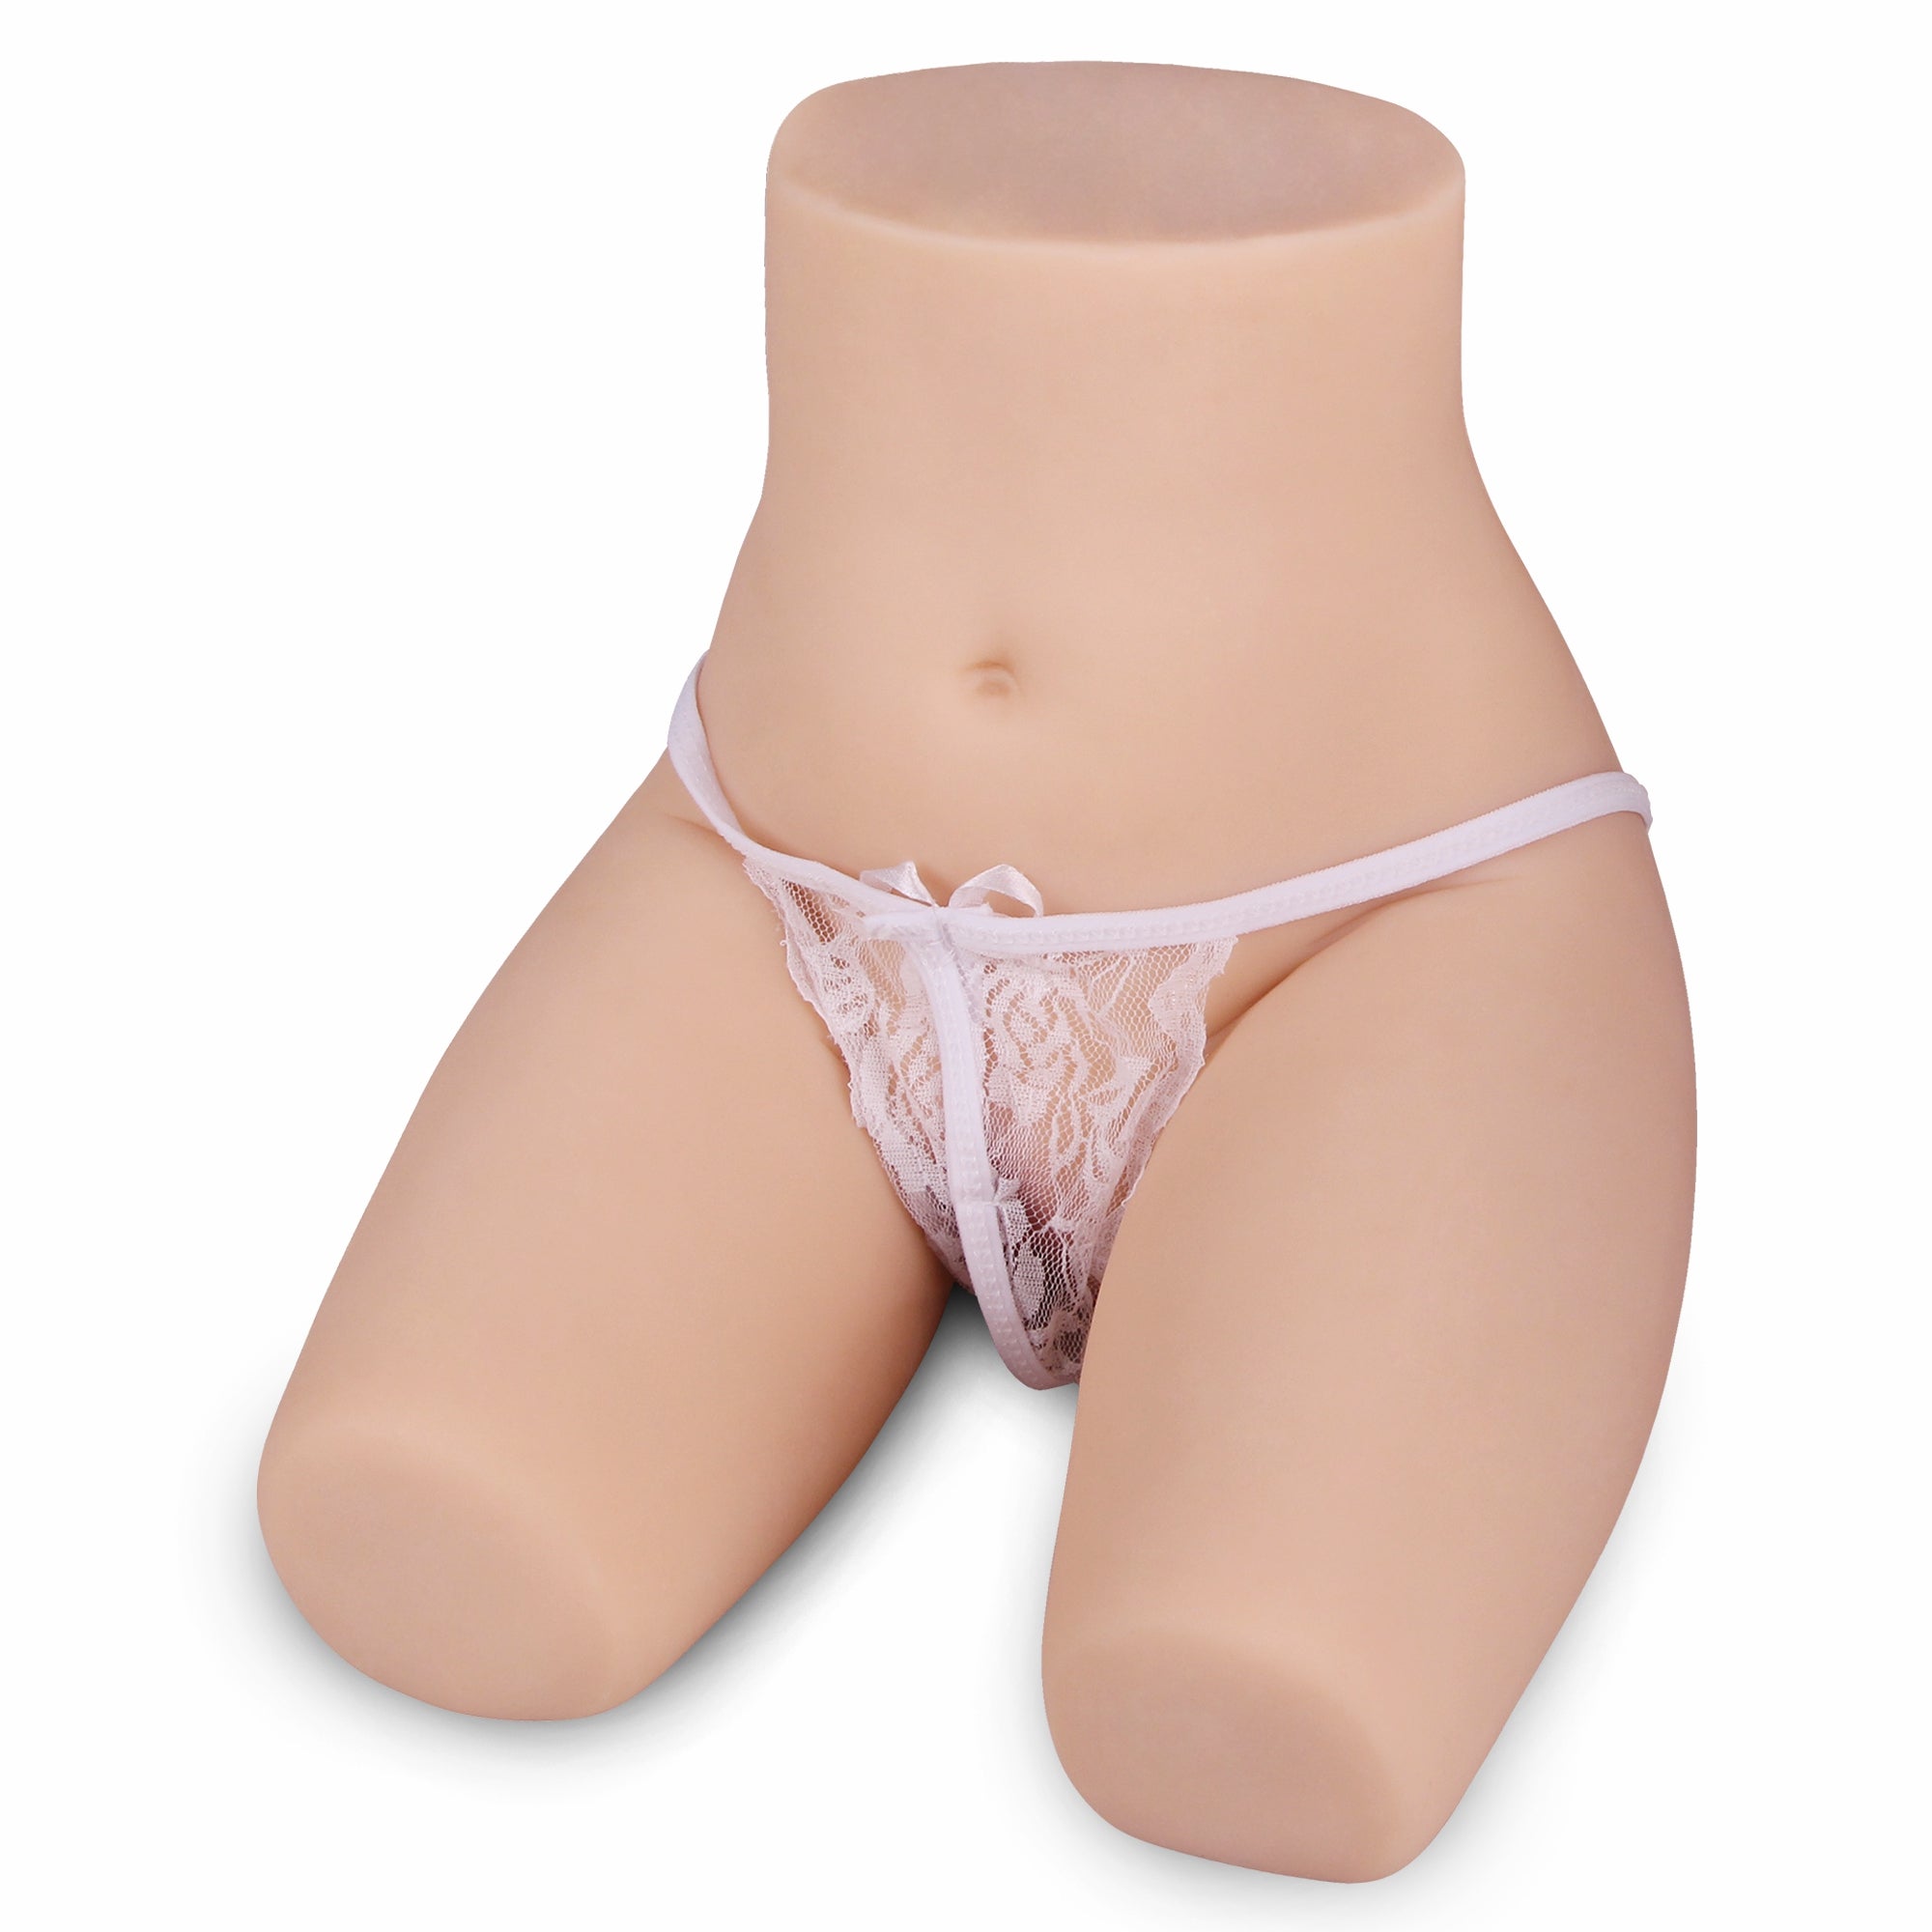 Male leg mold big buttock silicone lower body double point solid masturbation